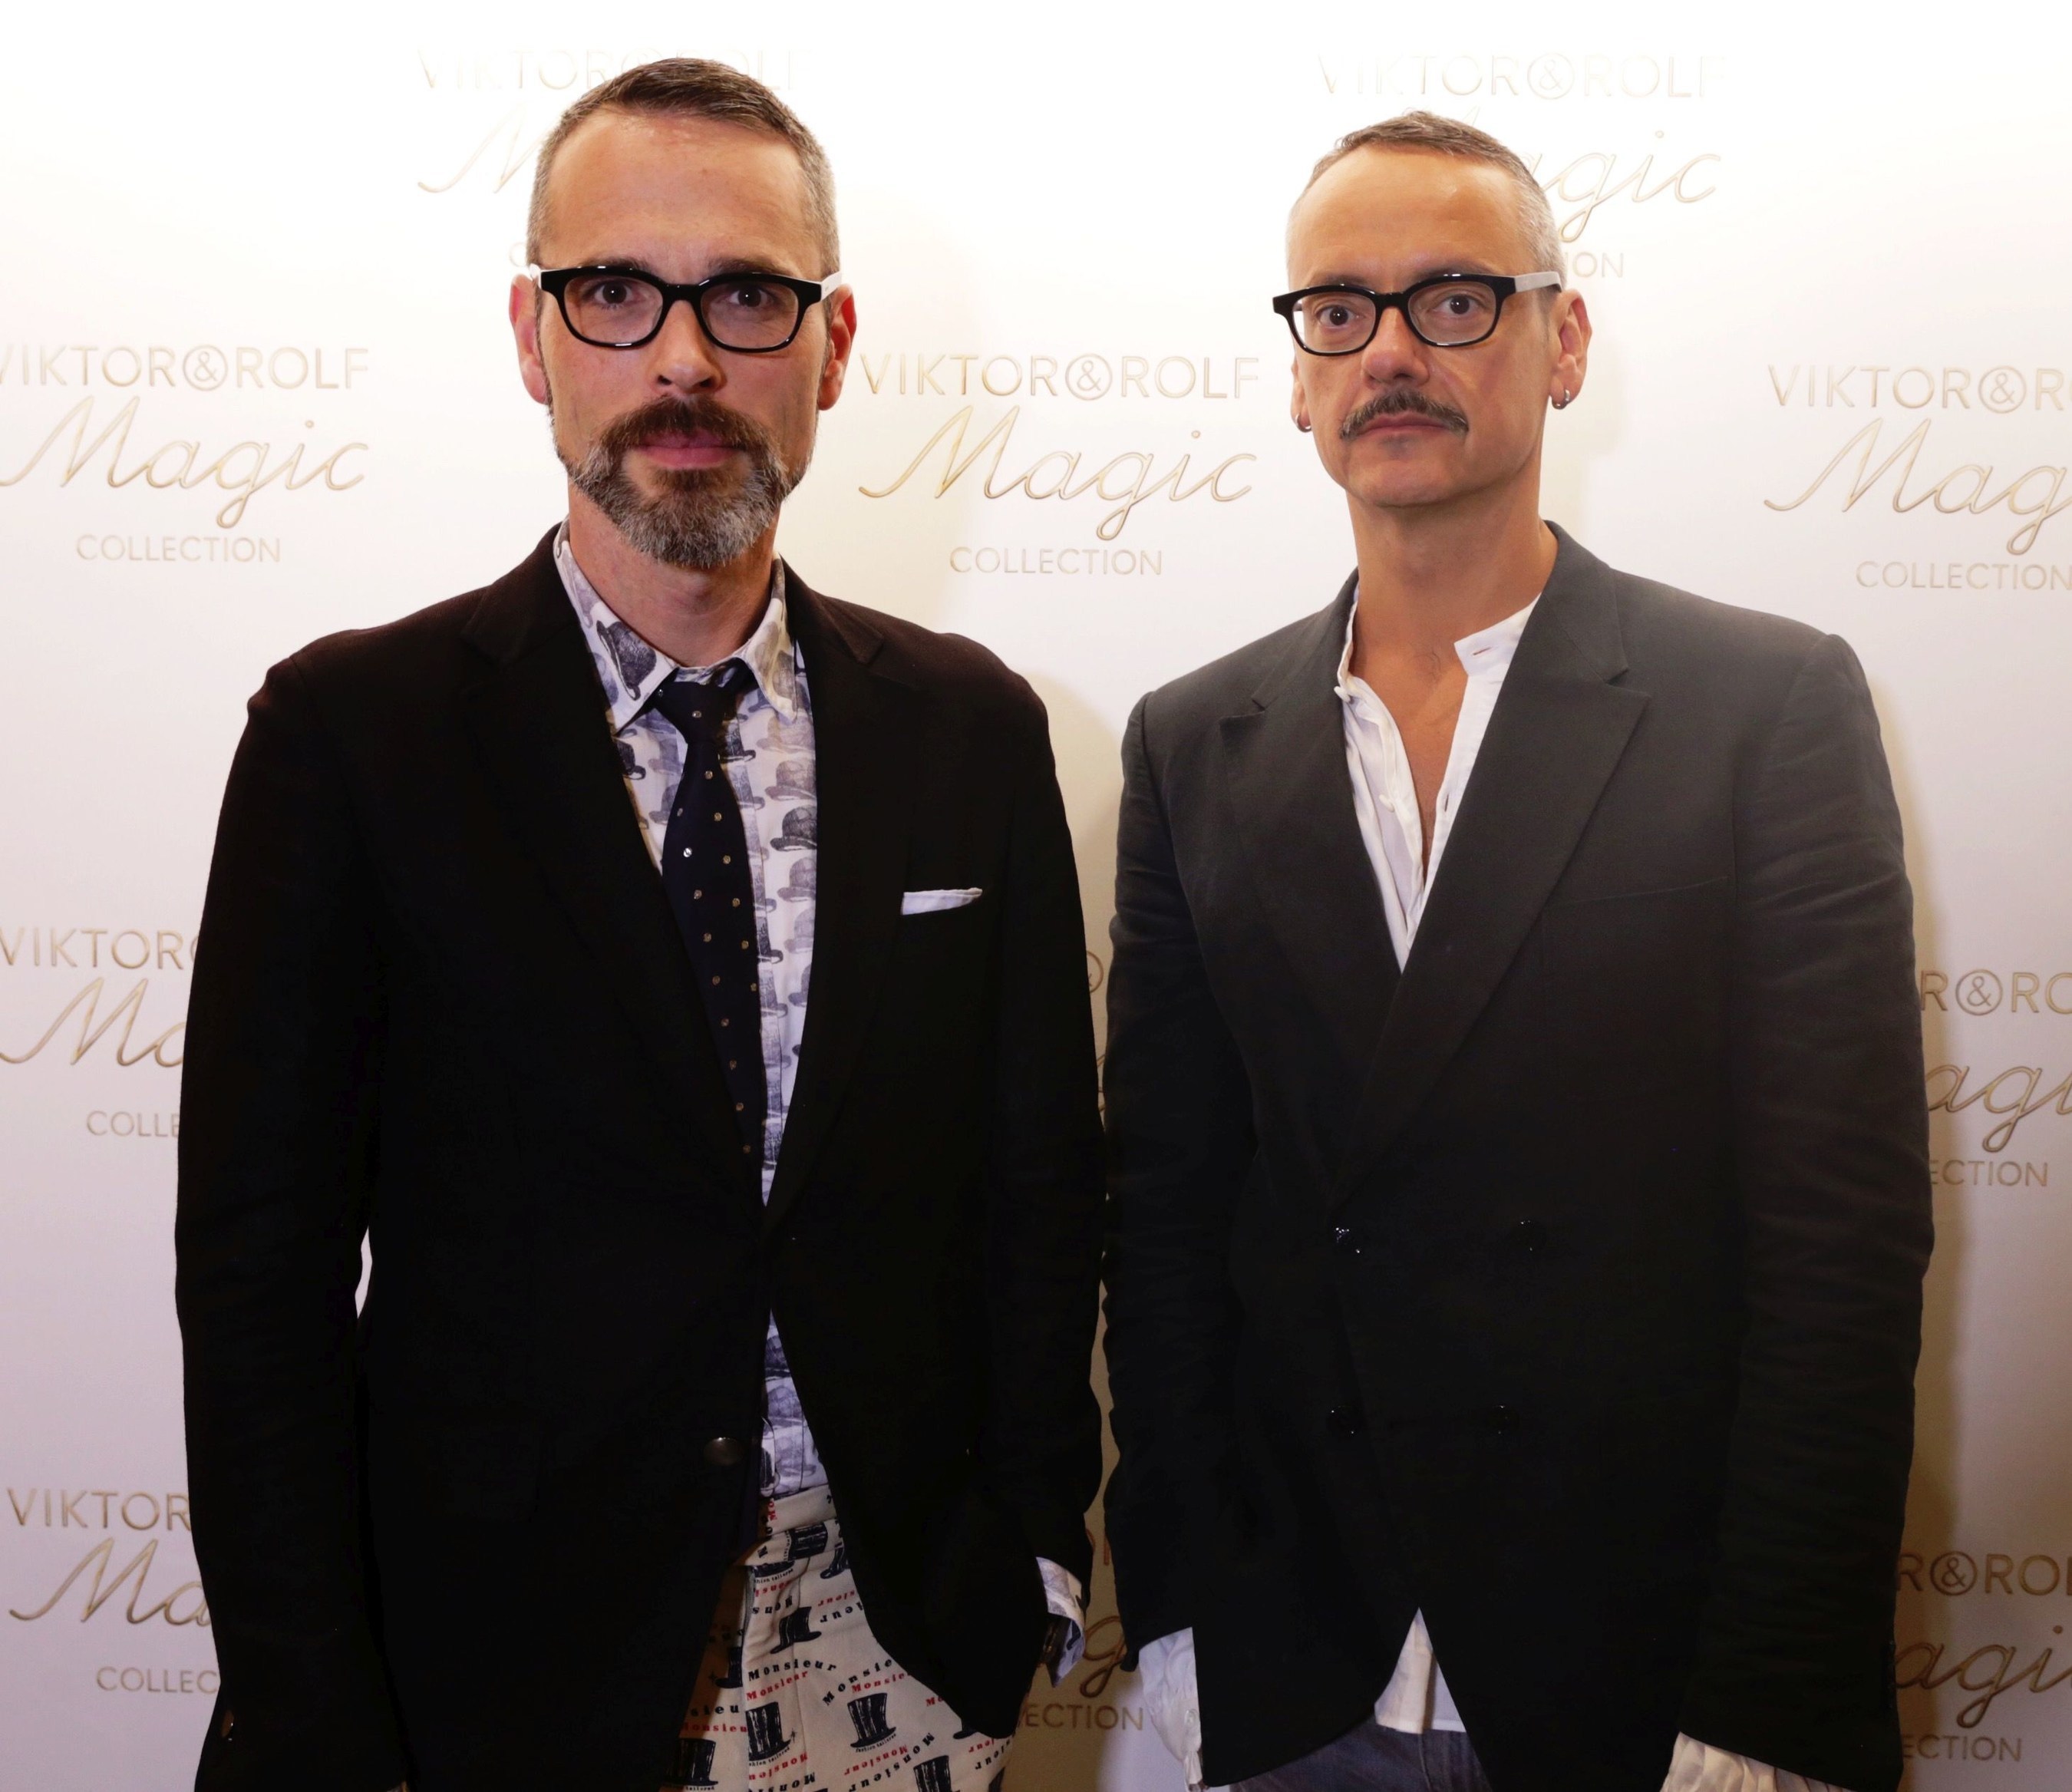 Viktor Horsting and Rolf Snoeren at the launch of their Viktor&Rolf Magic Collection (PRNewsFoto/Viktor&Rolf)